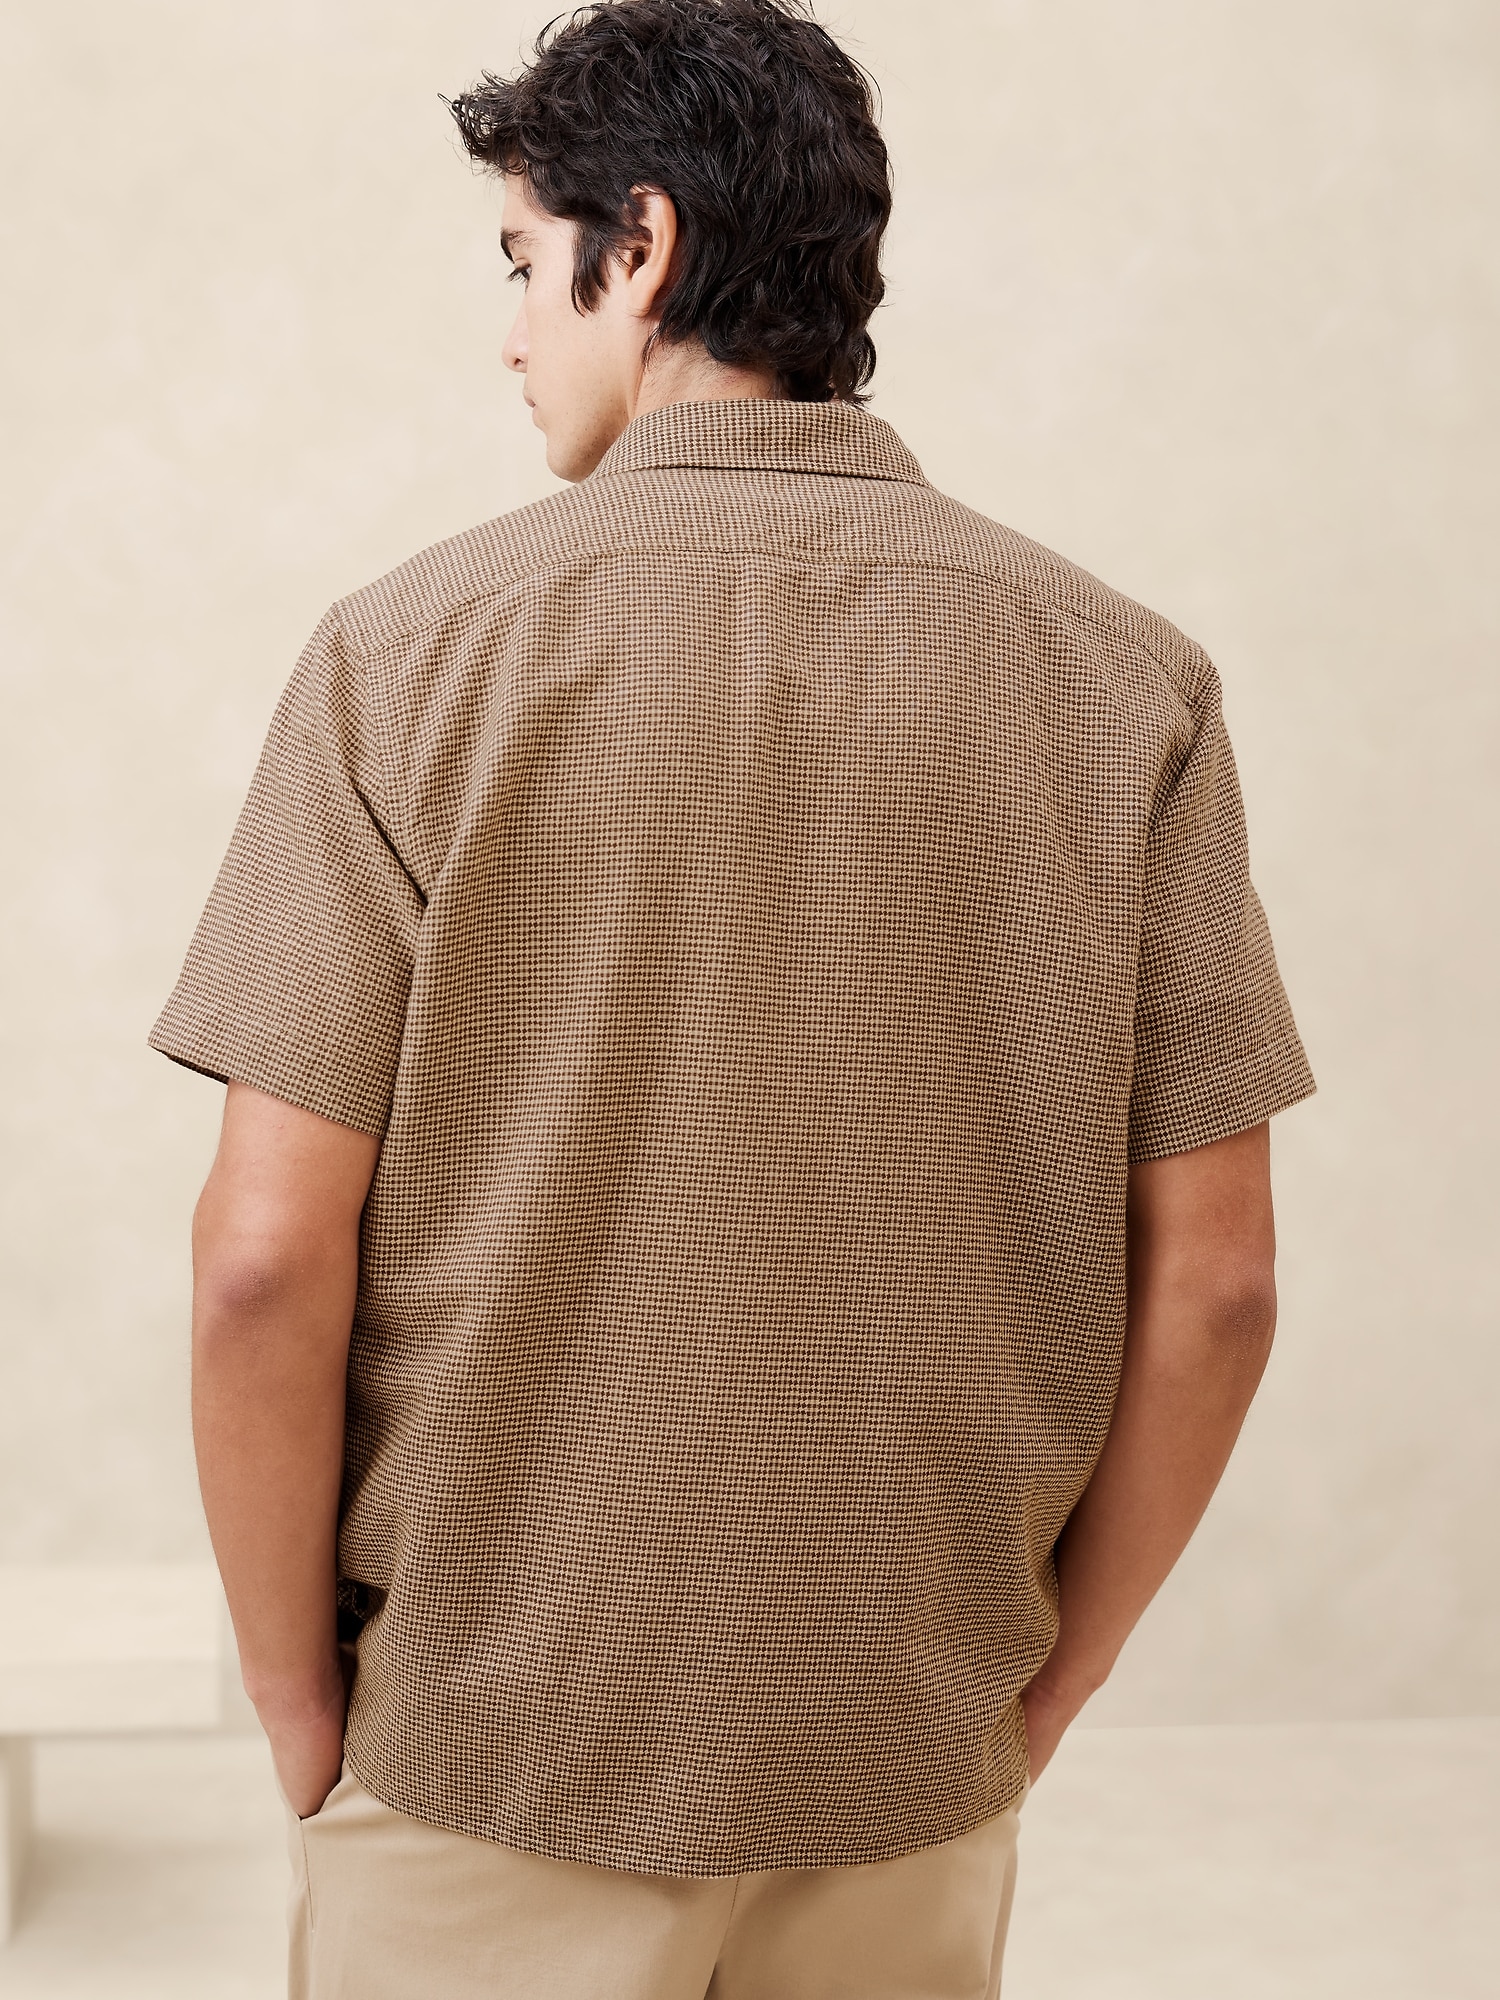 Artisanal Textured Shirt